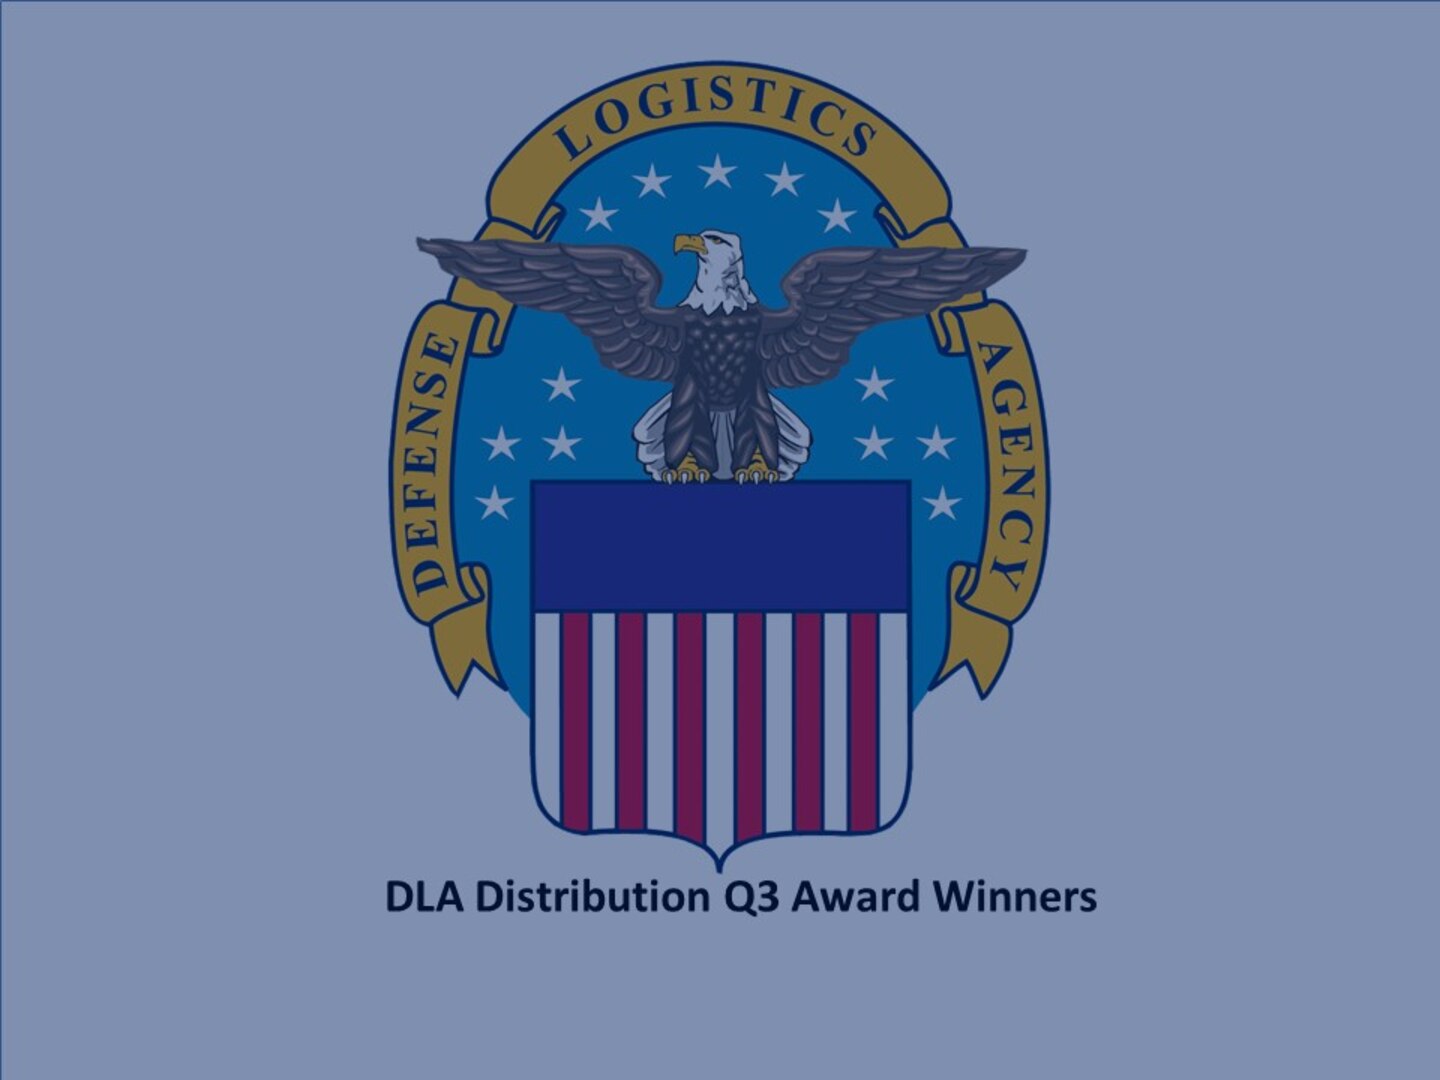 DLA Distribution Q3 Award Winners graphic